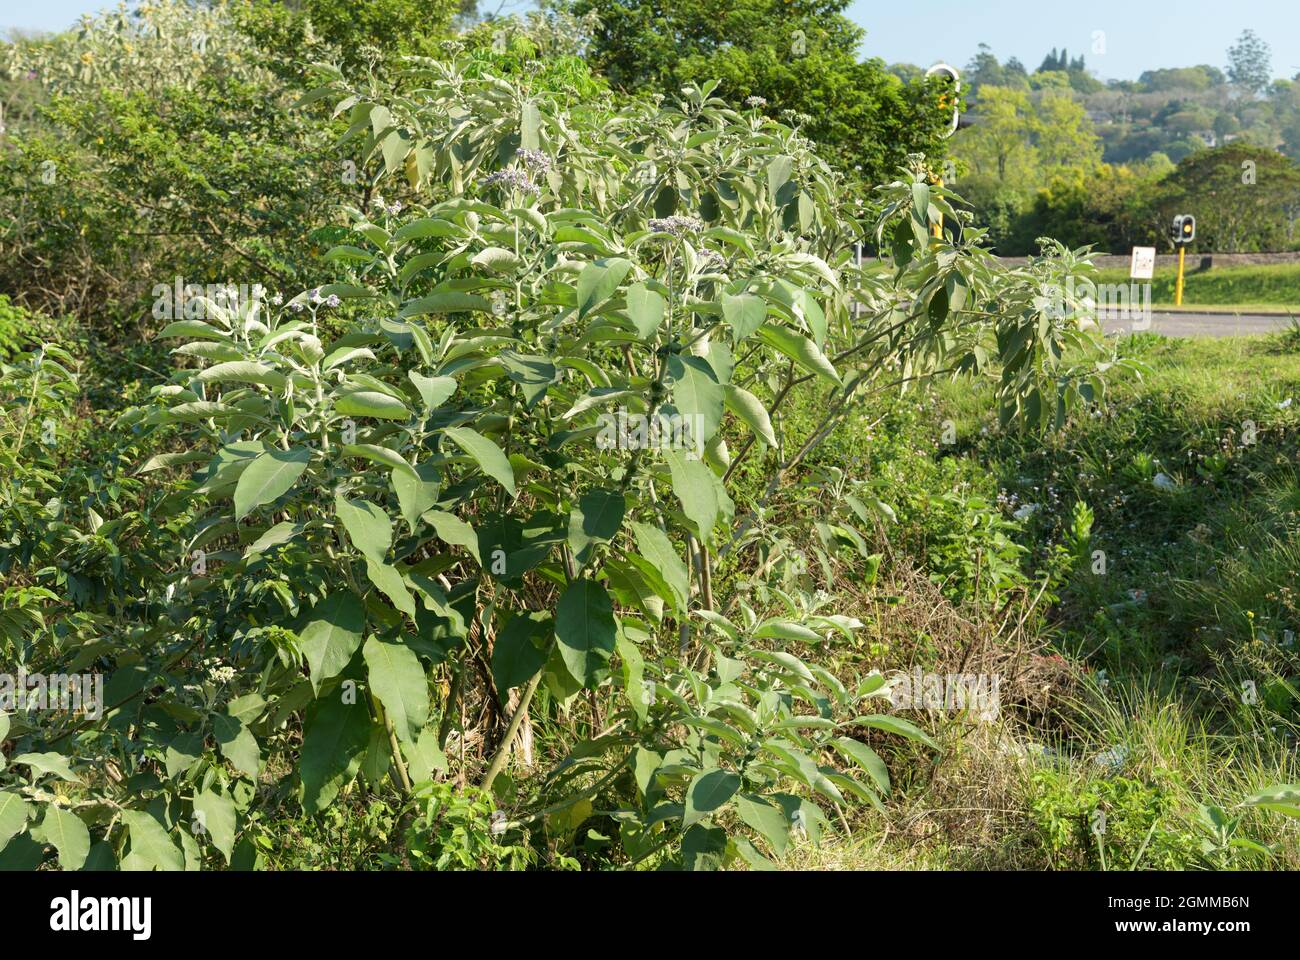 Exotic alien invasive plant, Solanum mauritianum, Earleaf Nightshade, Flannel weed, Bug weed, growing wild KwaZulu-Natal, South Africa, illustration Stock Photo